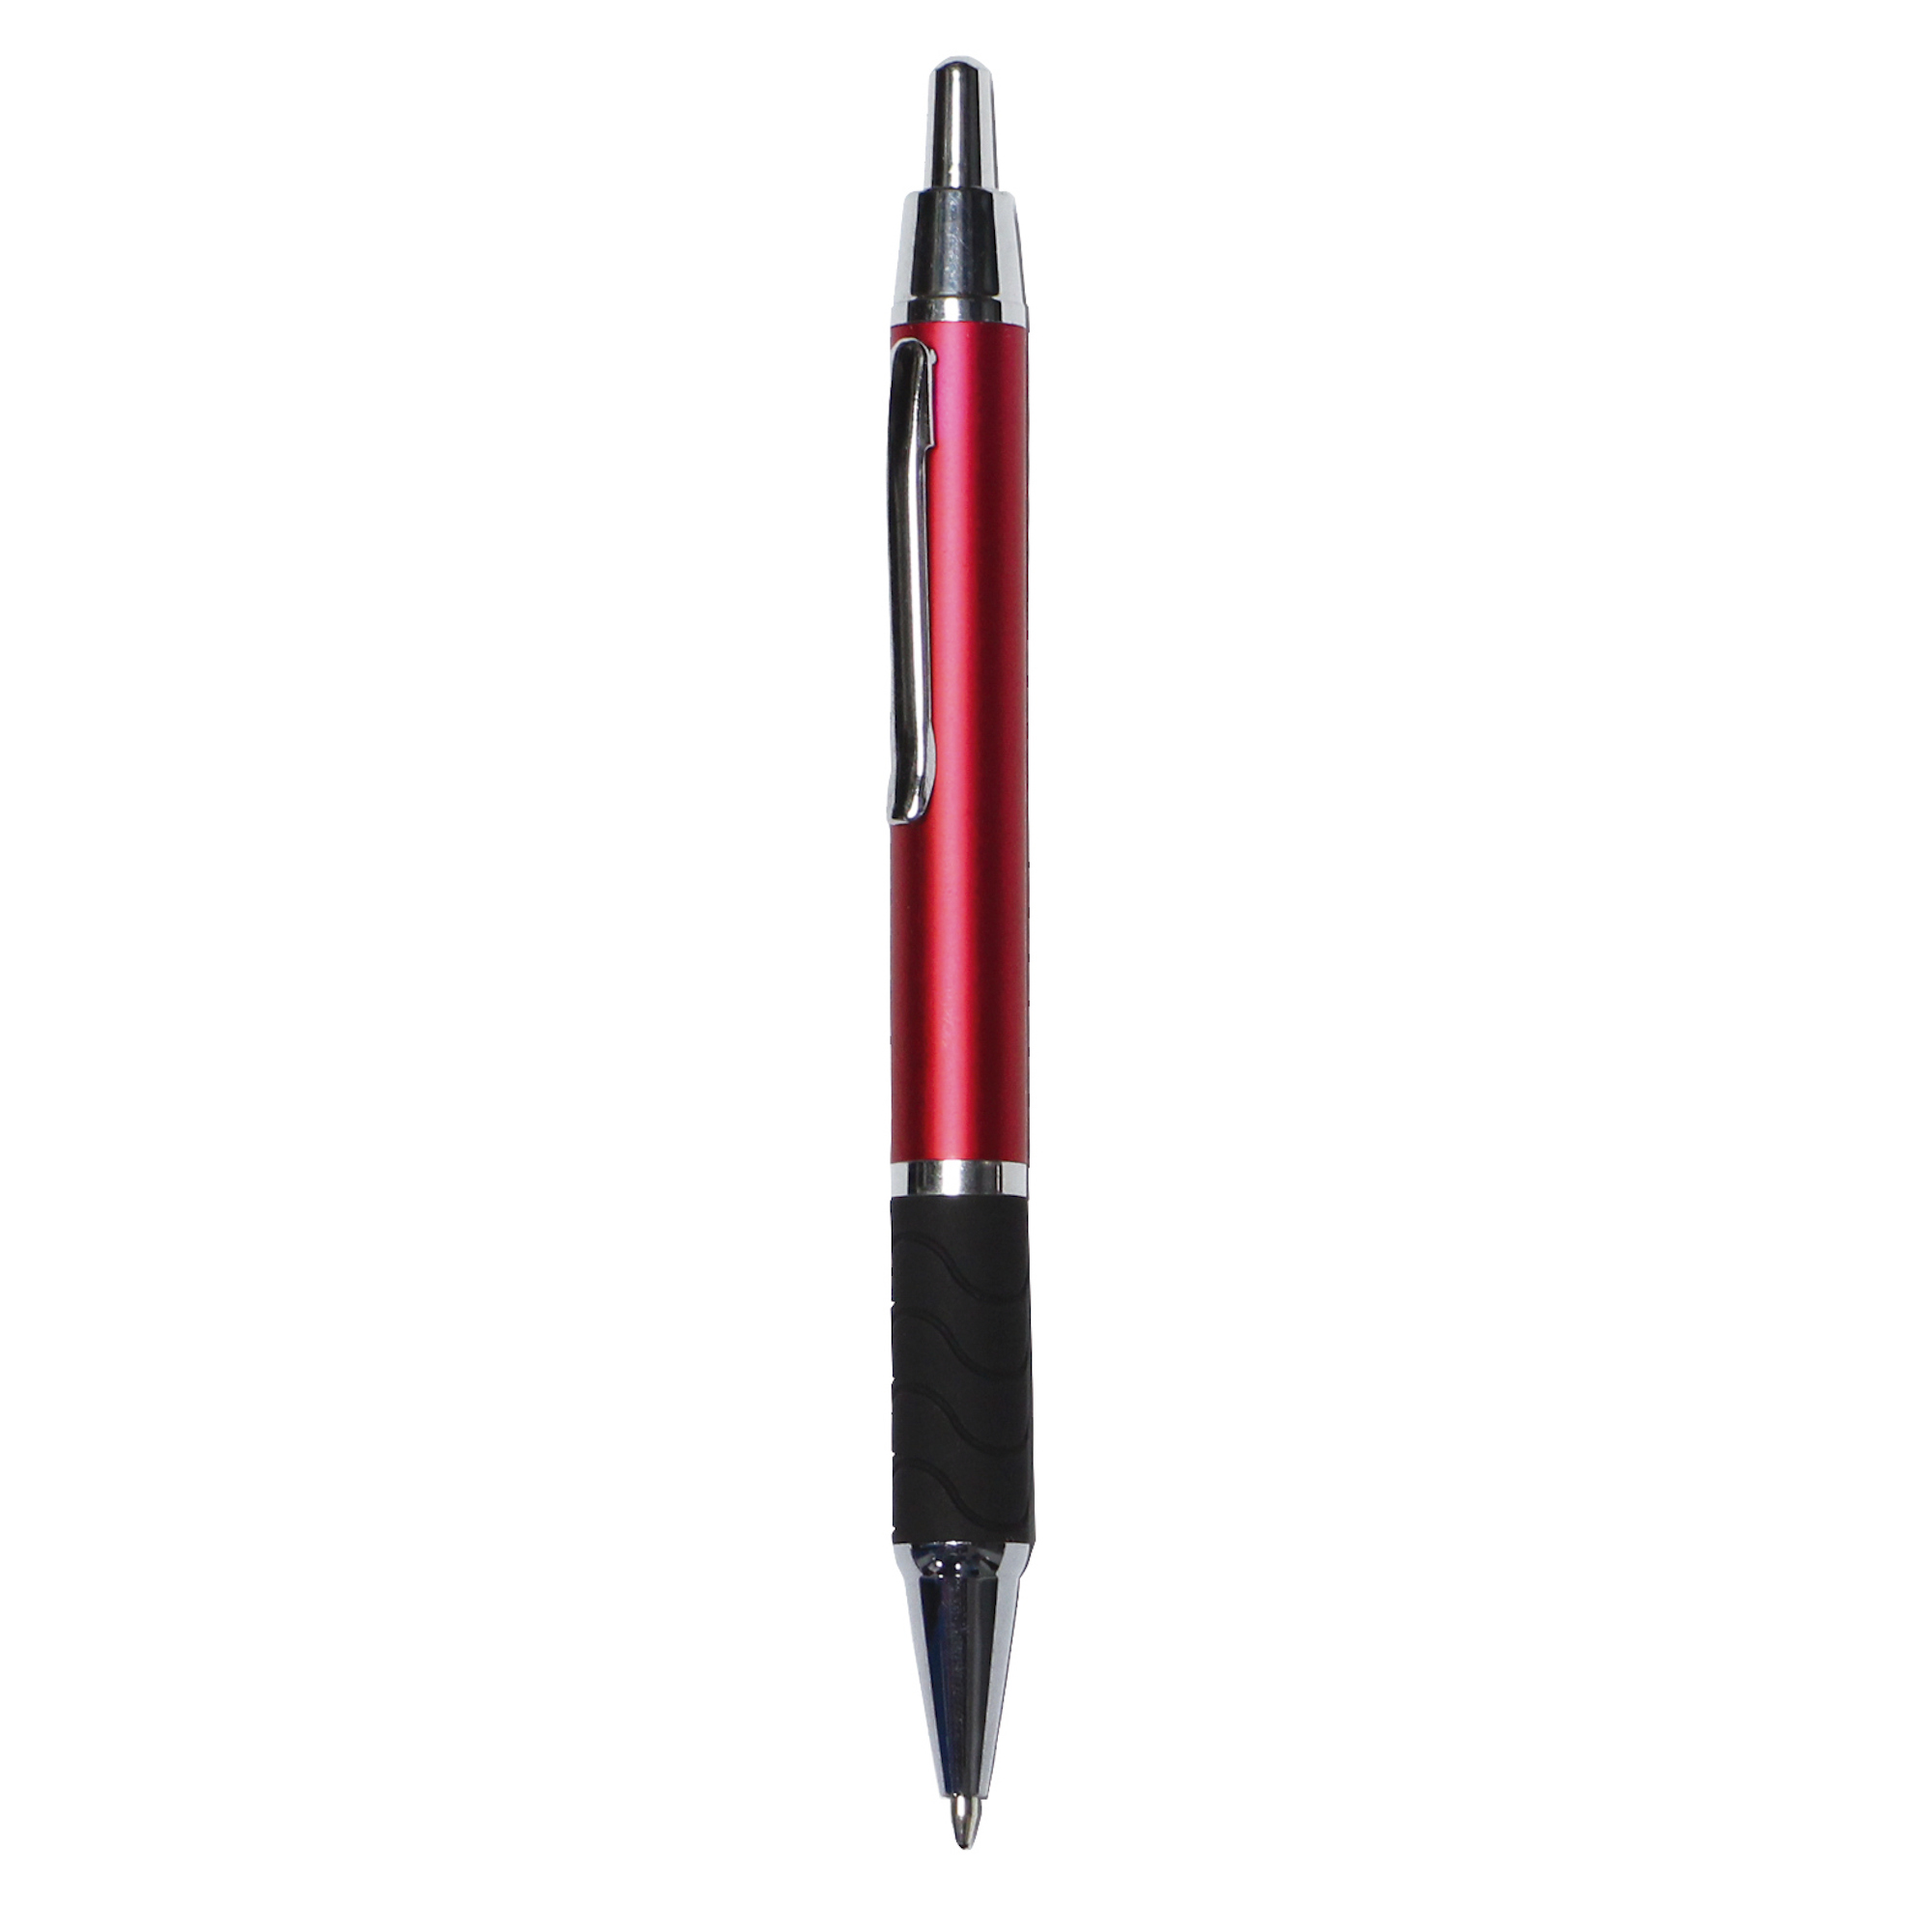 Bolígrafo Tamesis
Color rojo